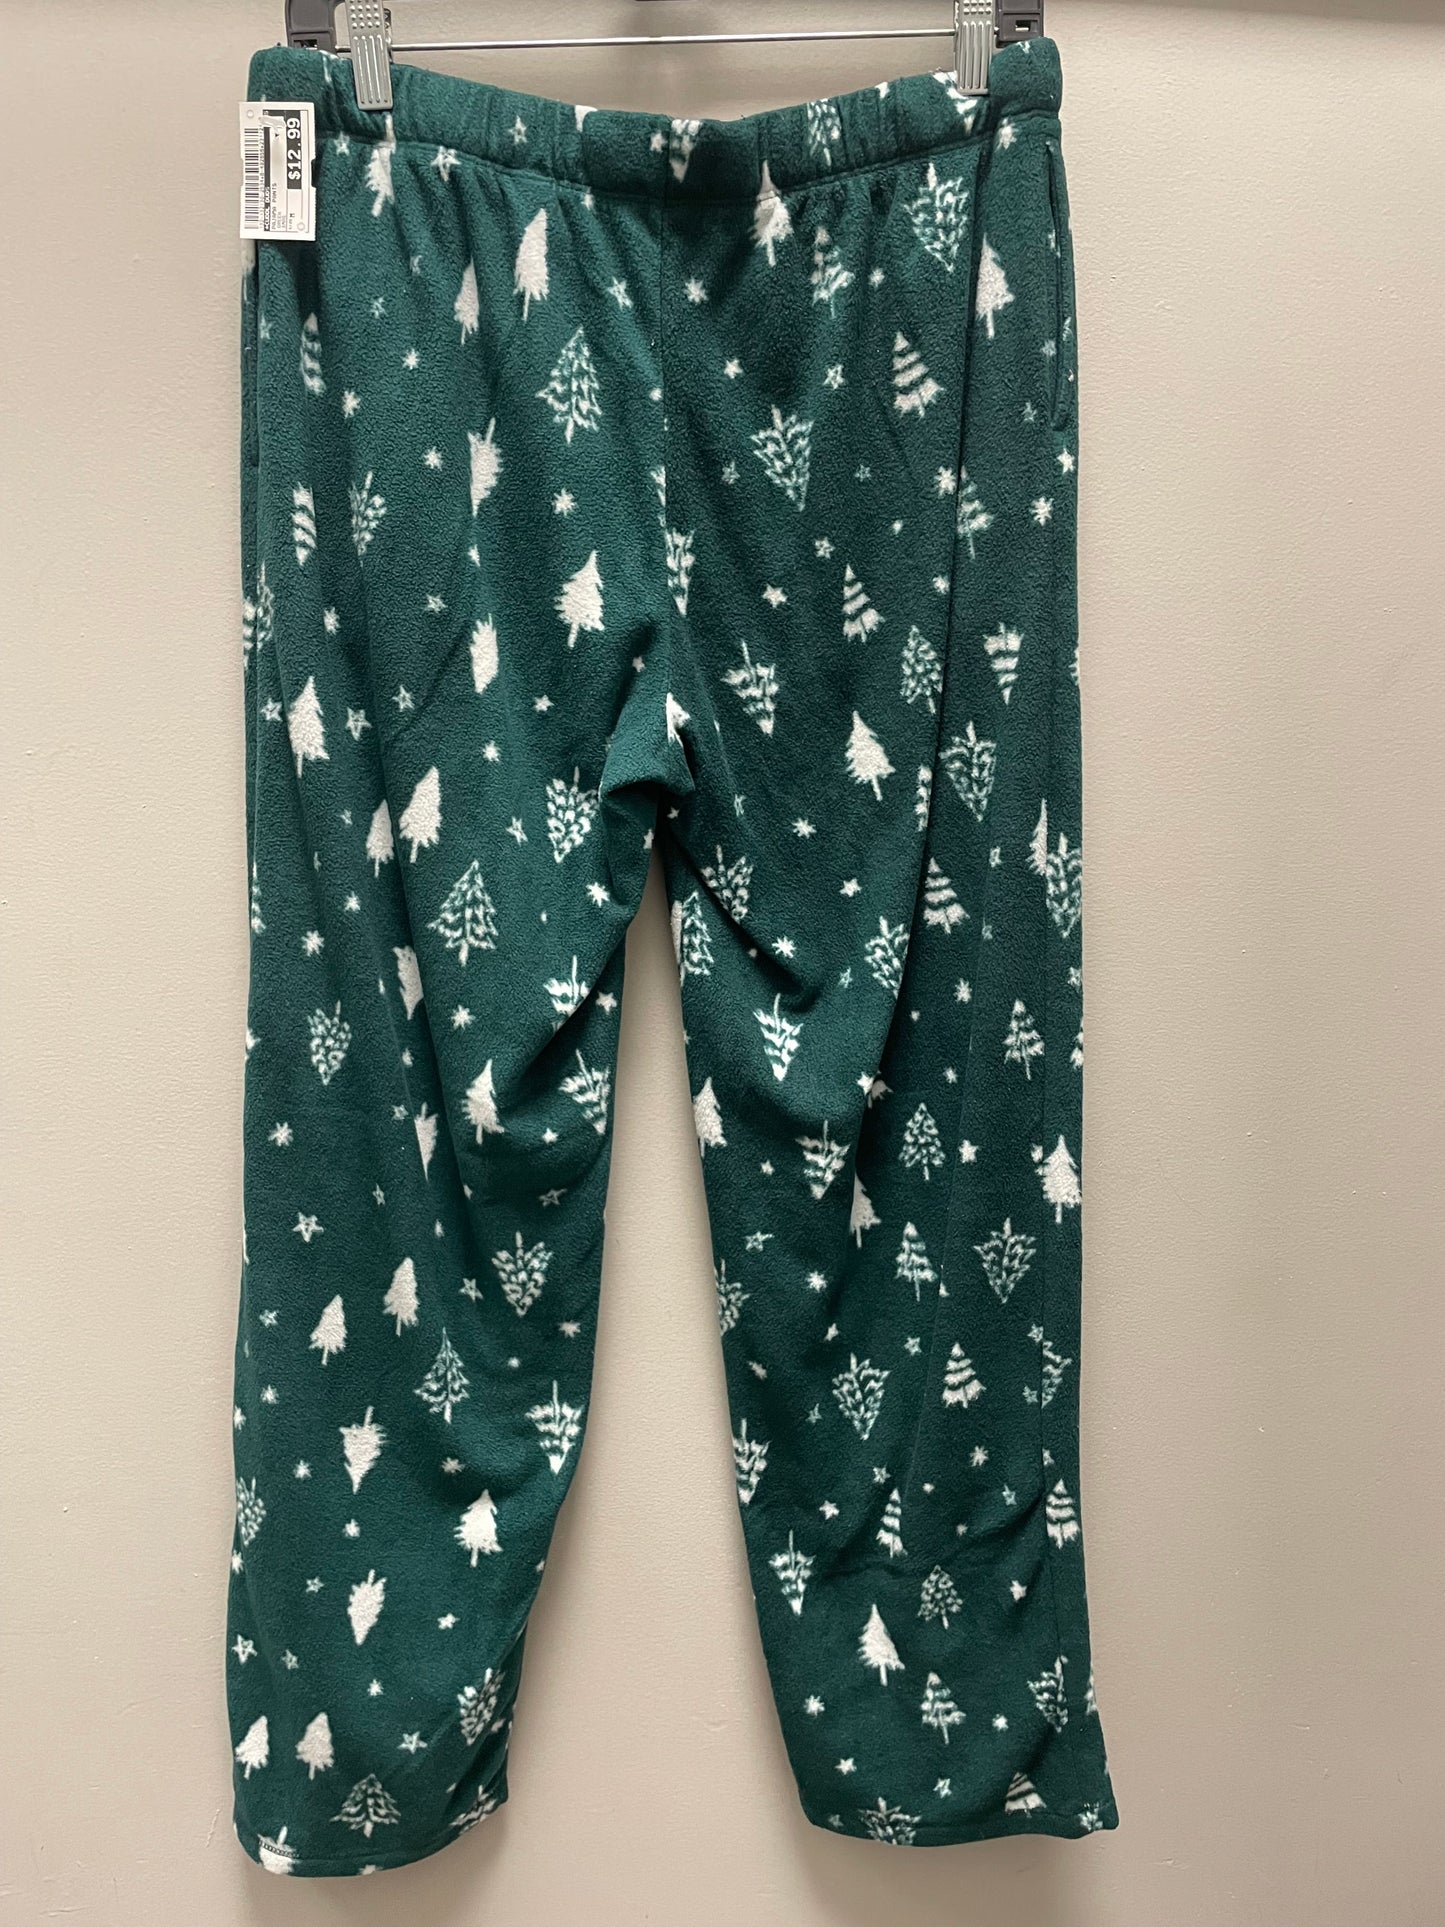 Pajama Pants By Cuddl Duds  Size: M